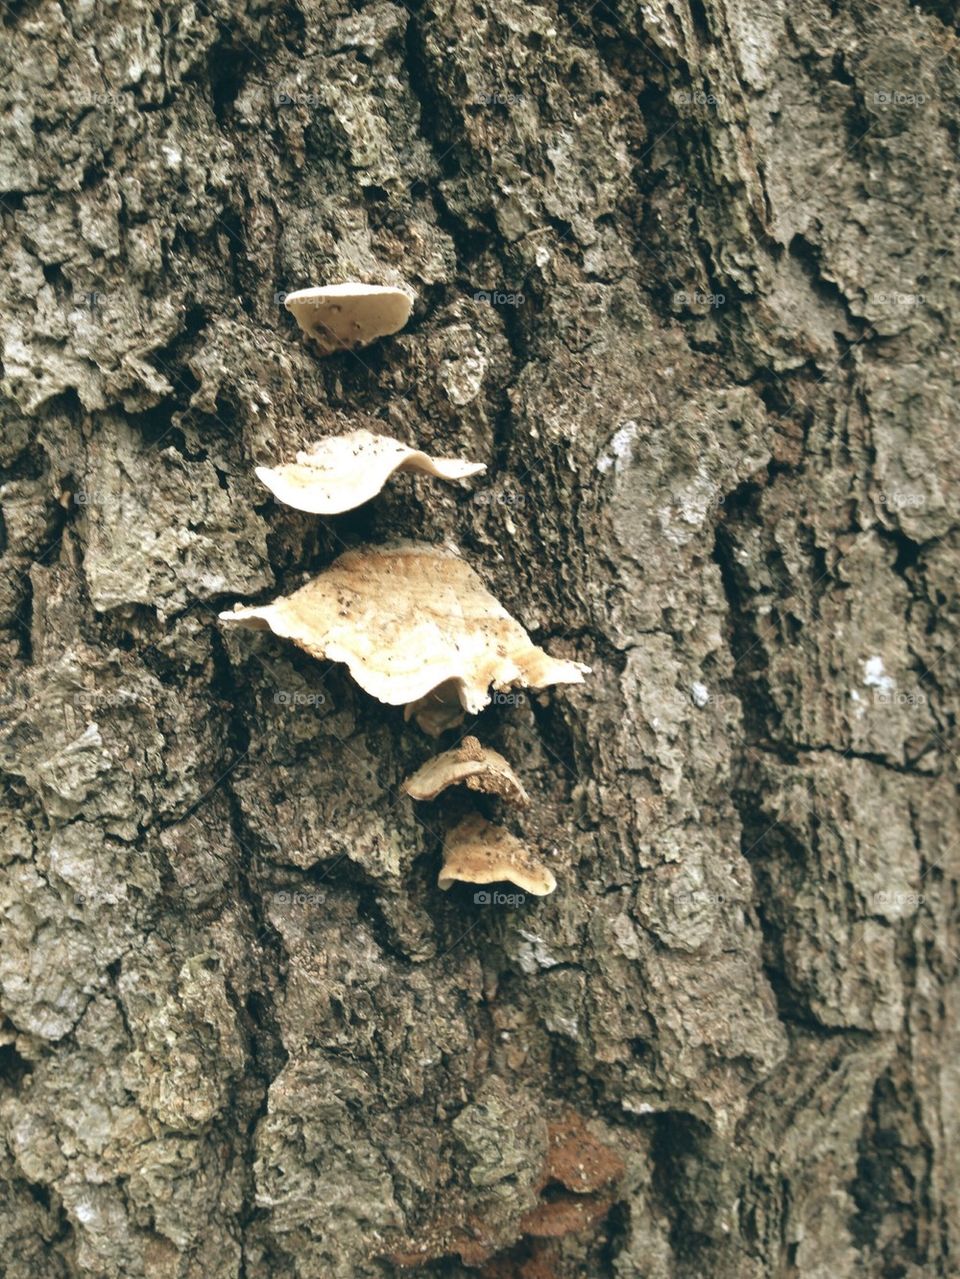 Fungi on the Tree